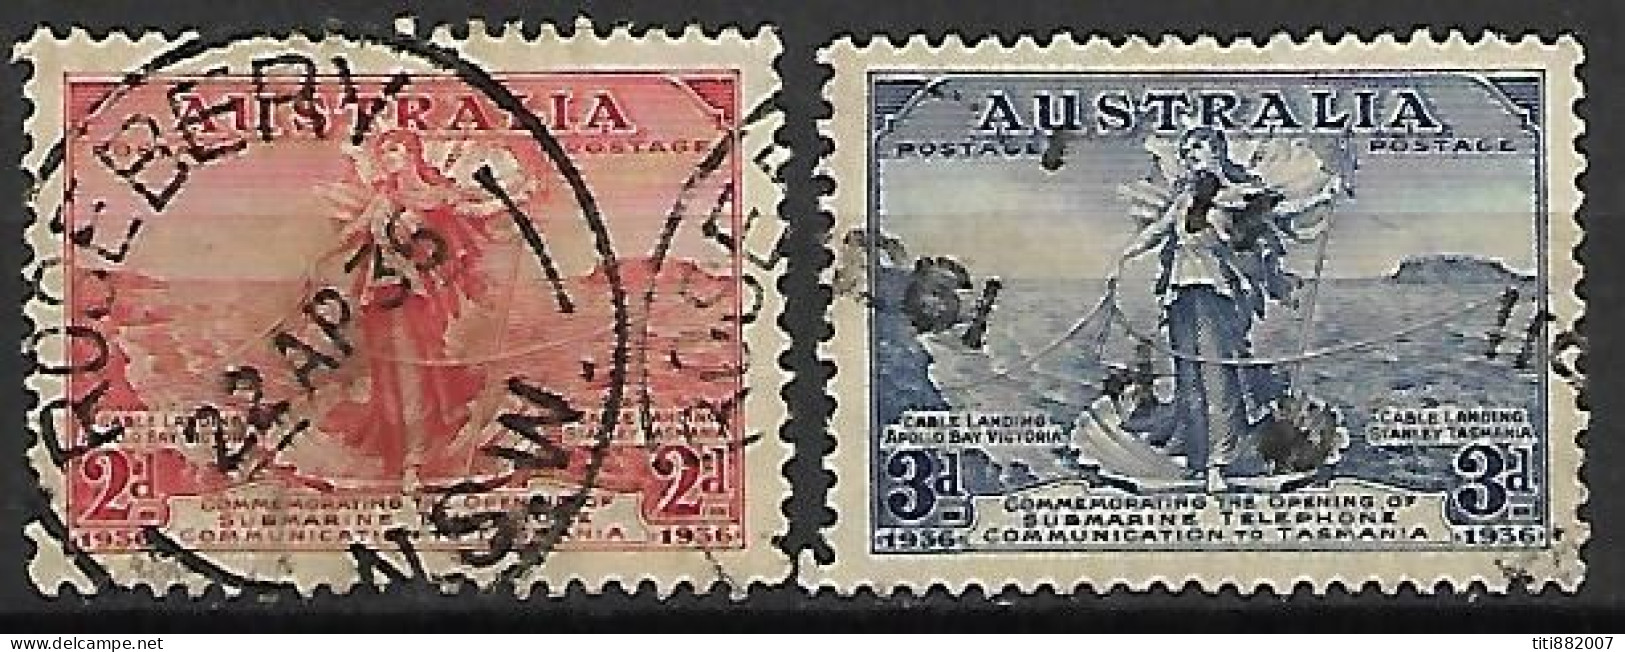 AUSTRALIE   -  1936 .  Y&T N°  106 Oblitéré .  Téléphonie - Used Stamps